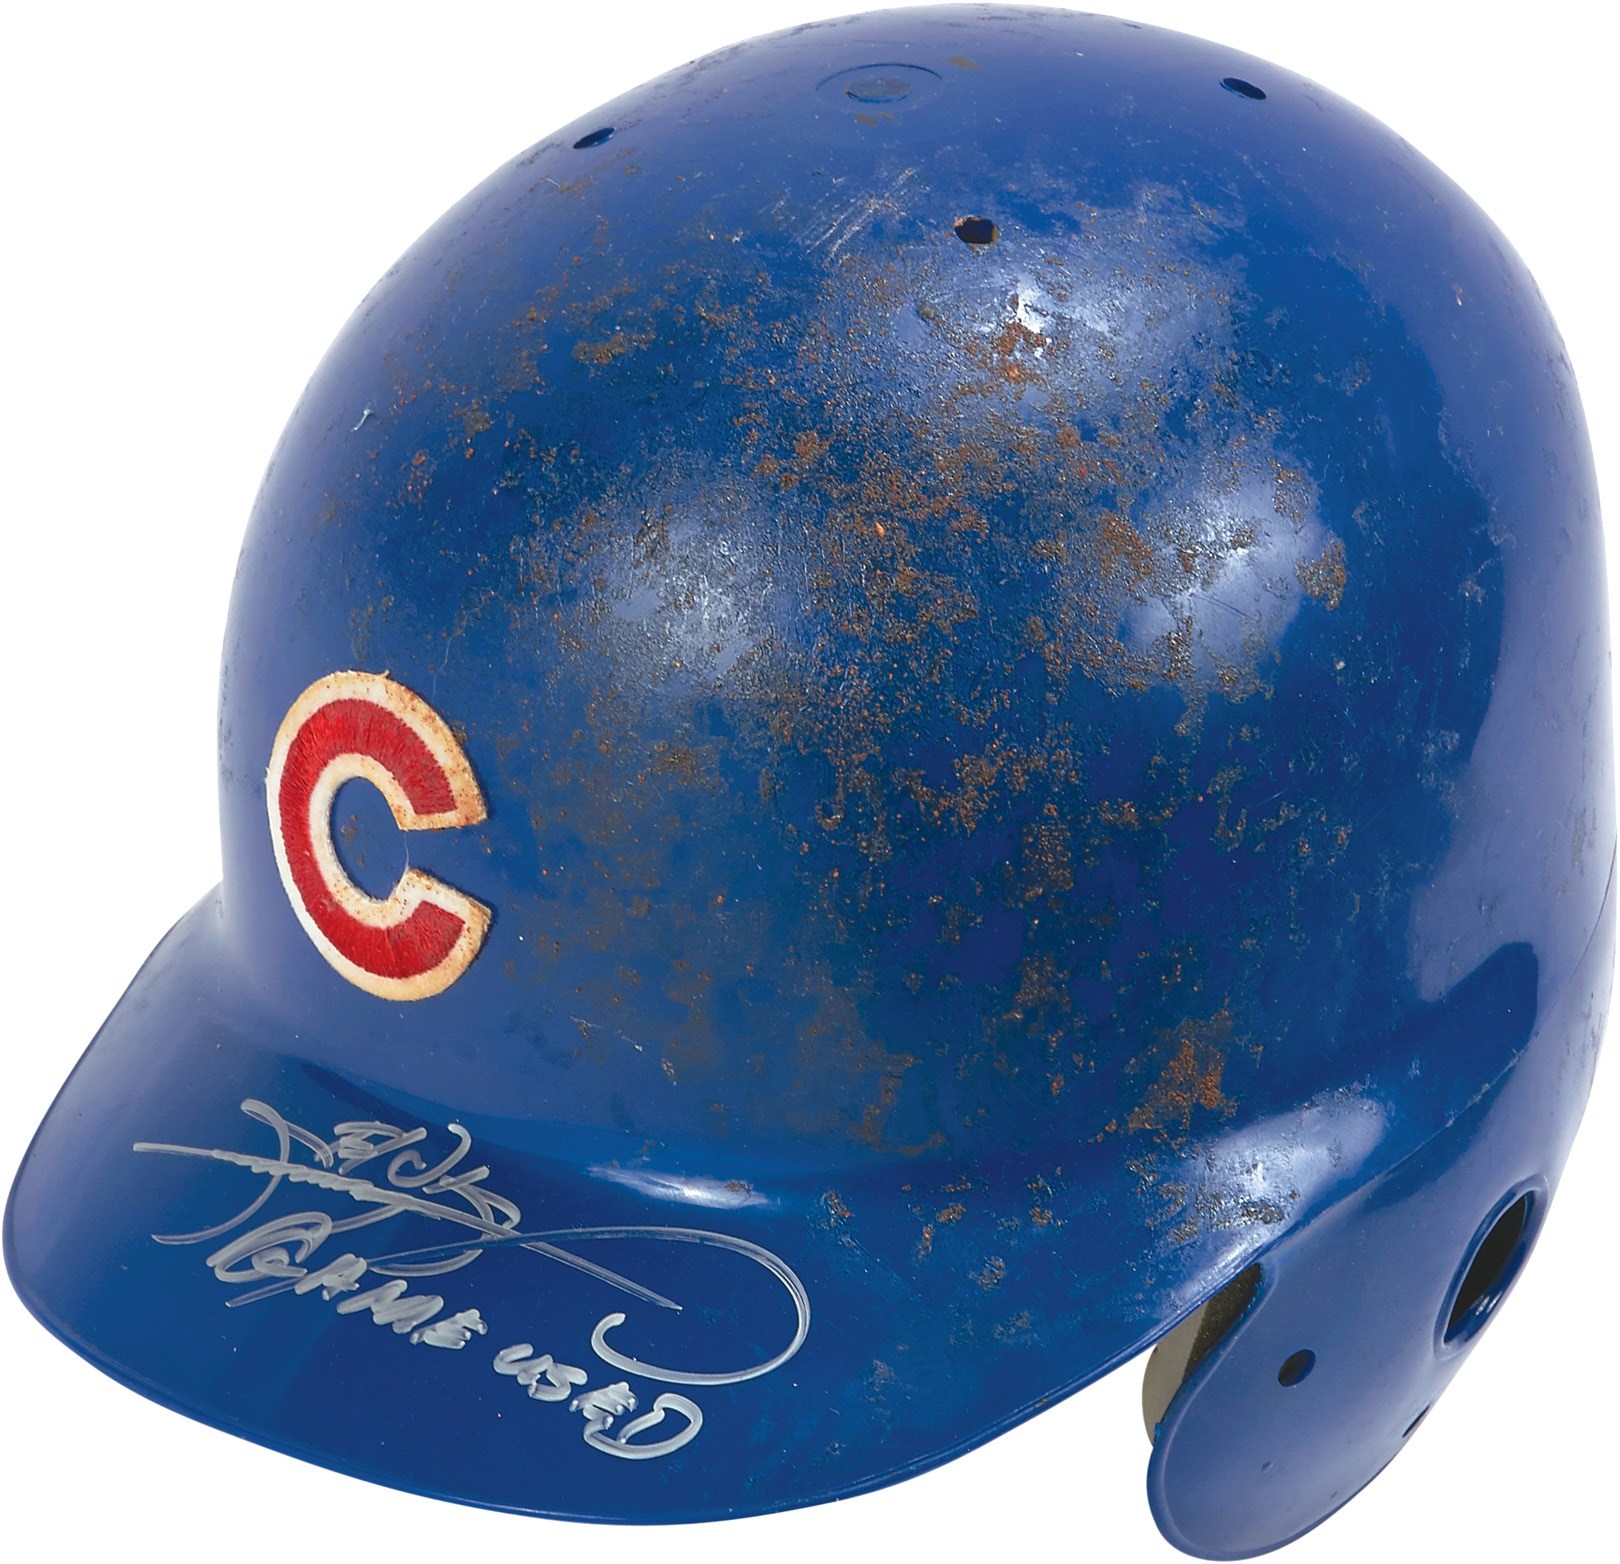 - Circa 1999 Sammy Sosa Game Worn & Signed Cubs Batting Helmet (PSA)